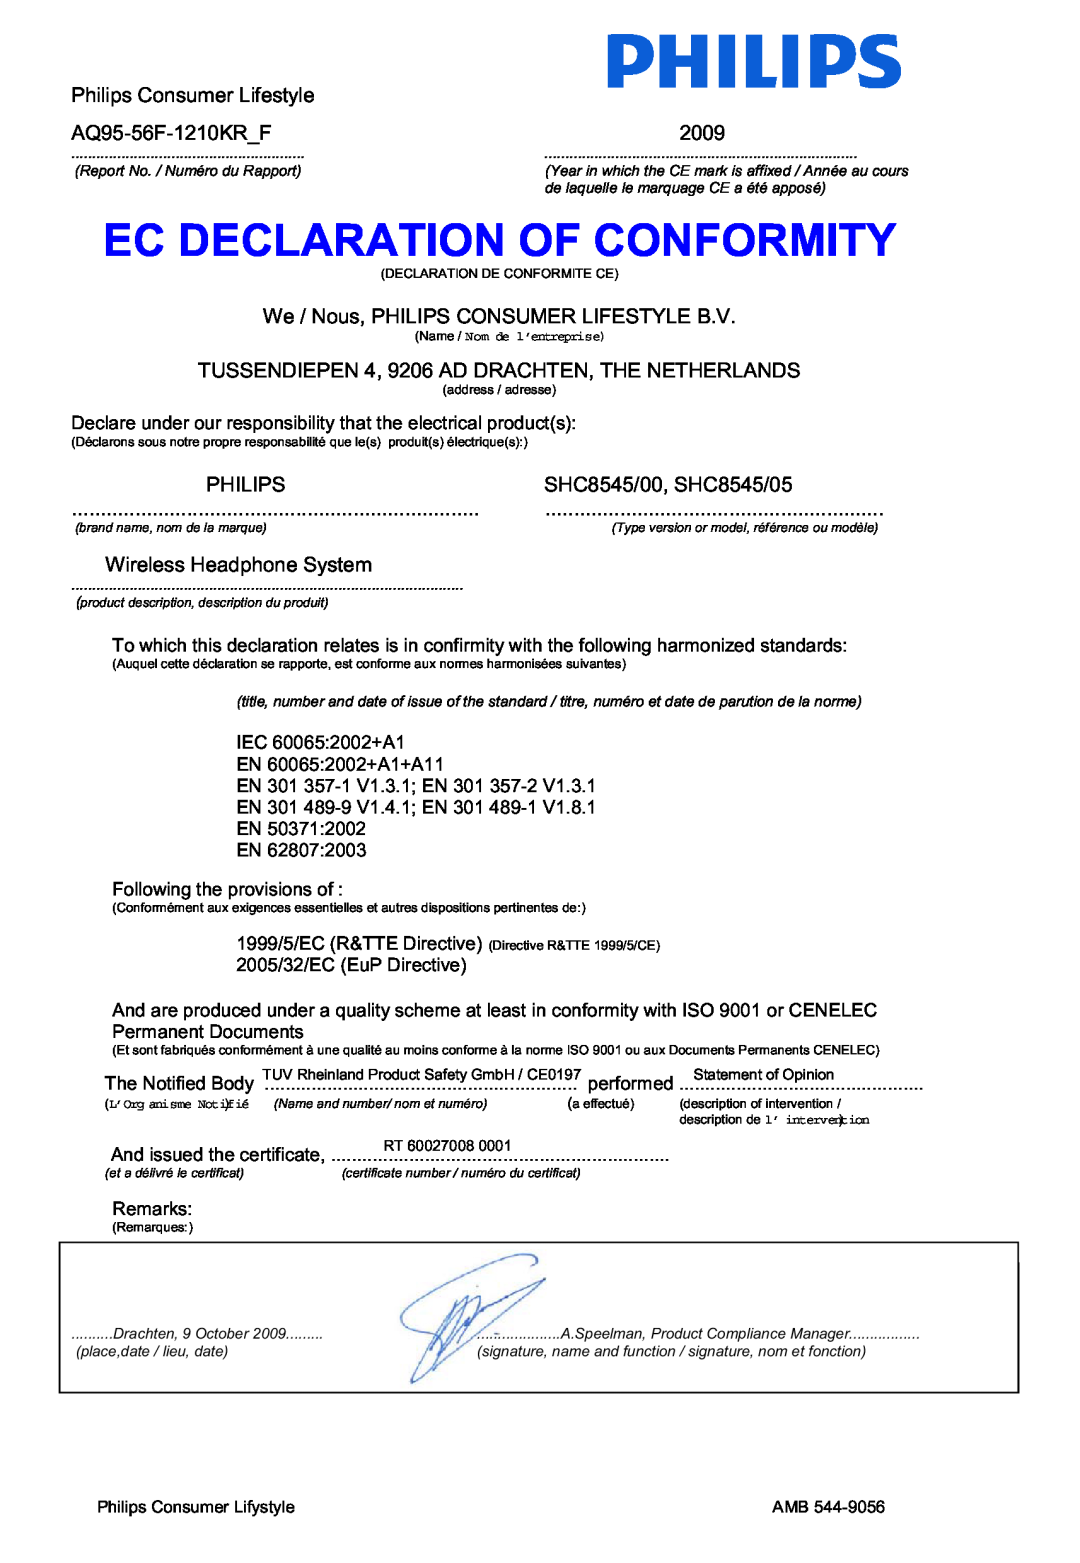 Philips SHC8545/00 manual Ec Declaration Of Conformity, Philips Consumer Lifestyle, AQ95-56F-1210KR_F, 2009 